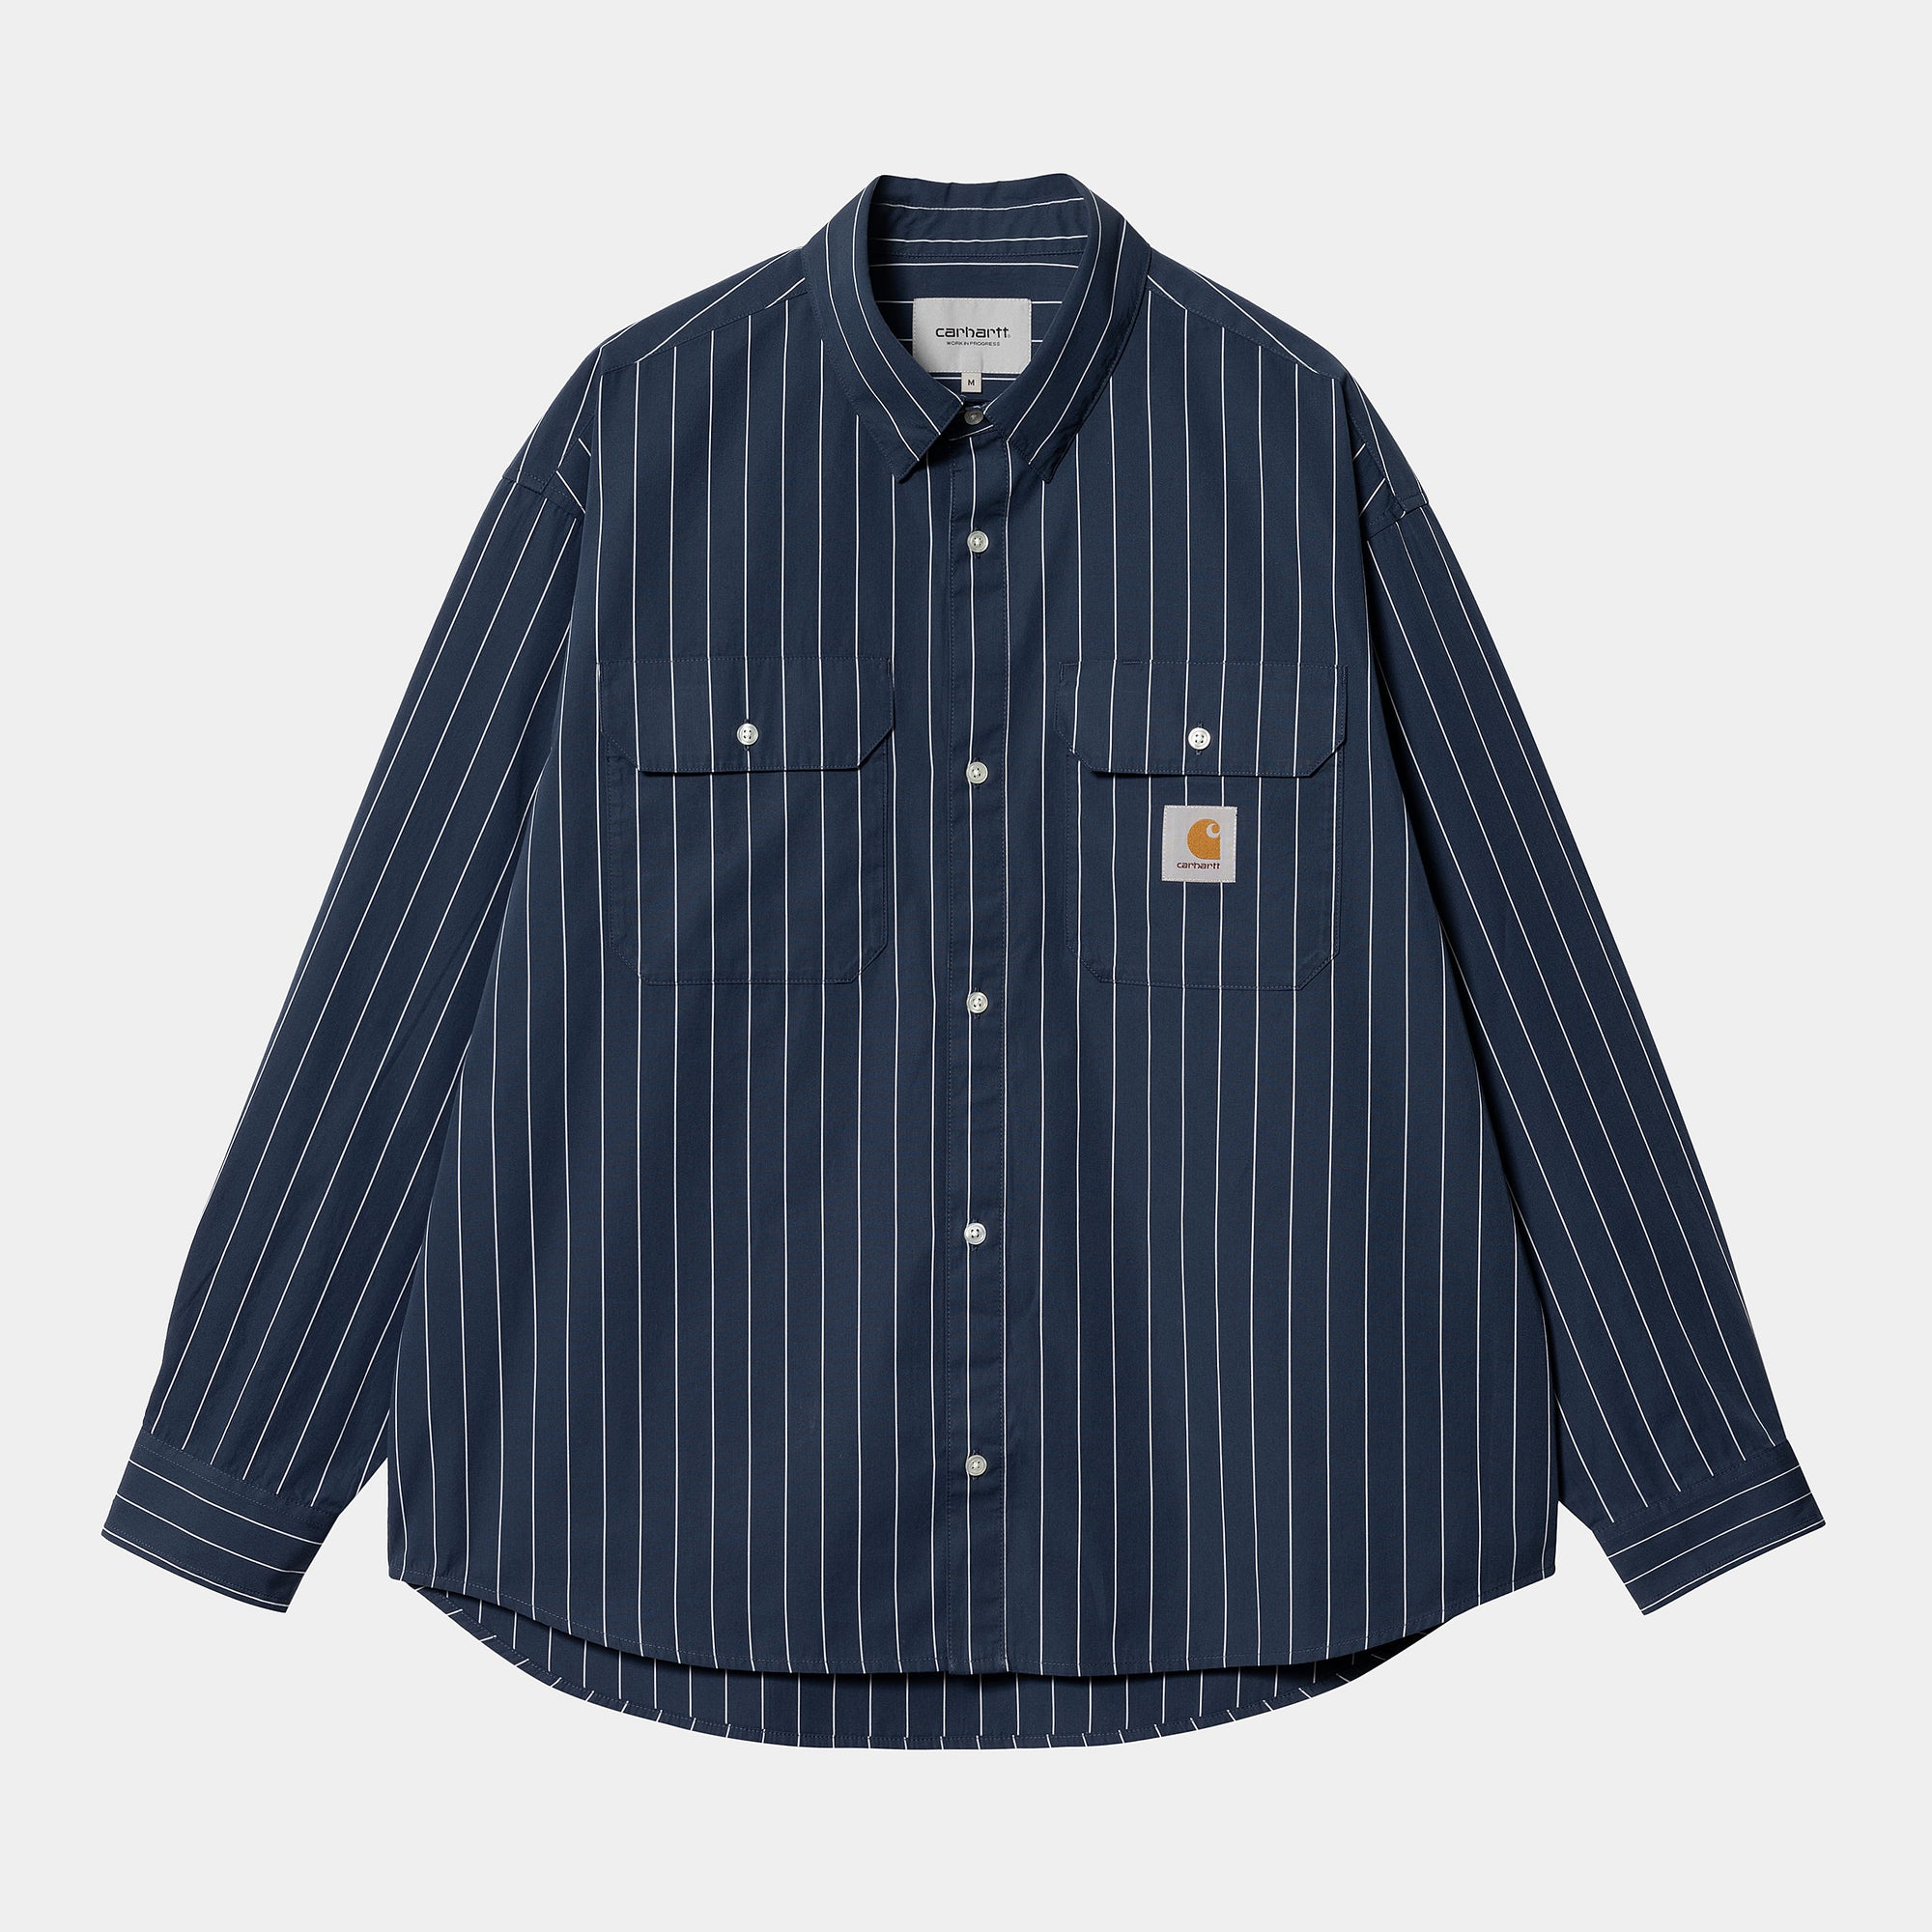 Carhartt WIP - Orlean Longsleeve Stripe Shirt - Blue / White